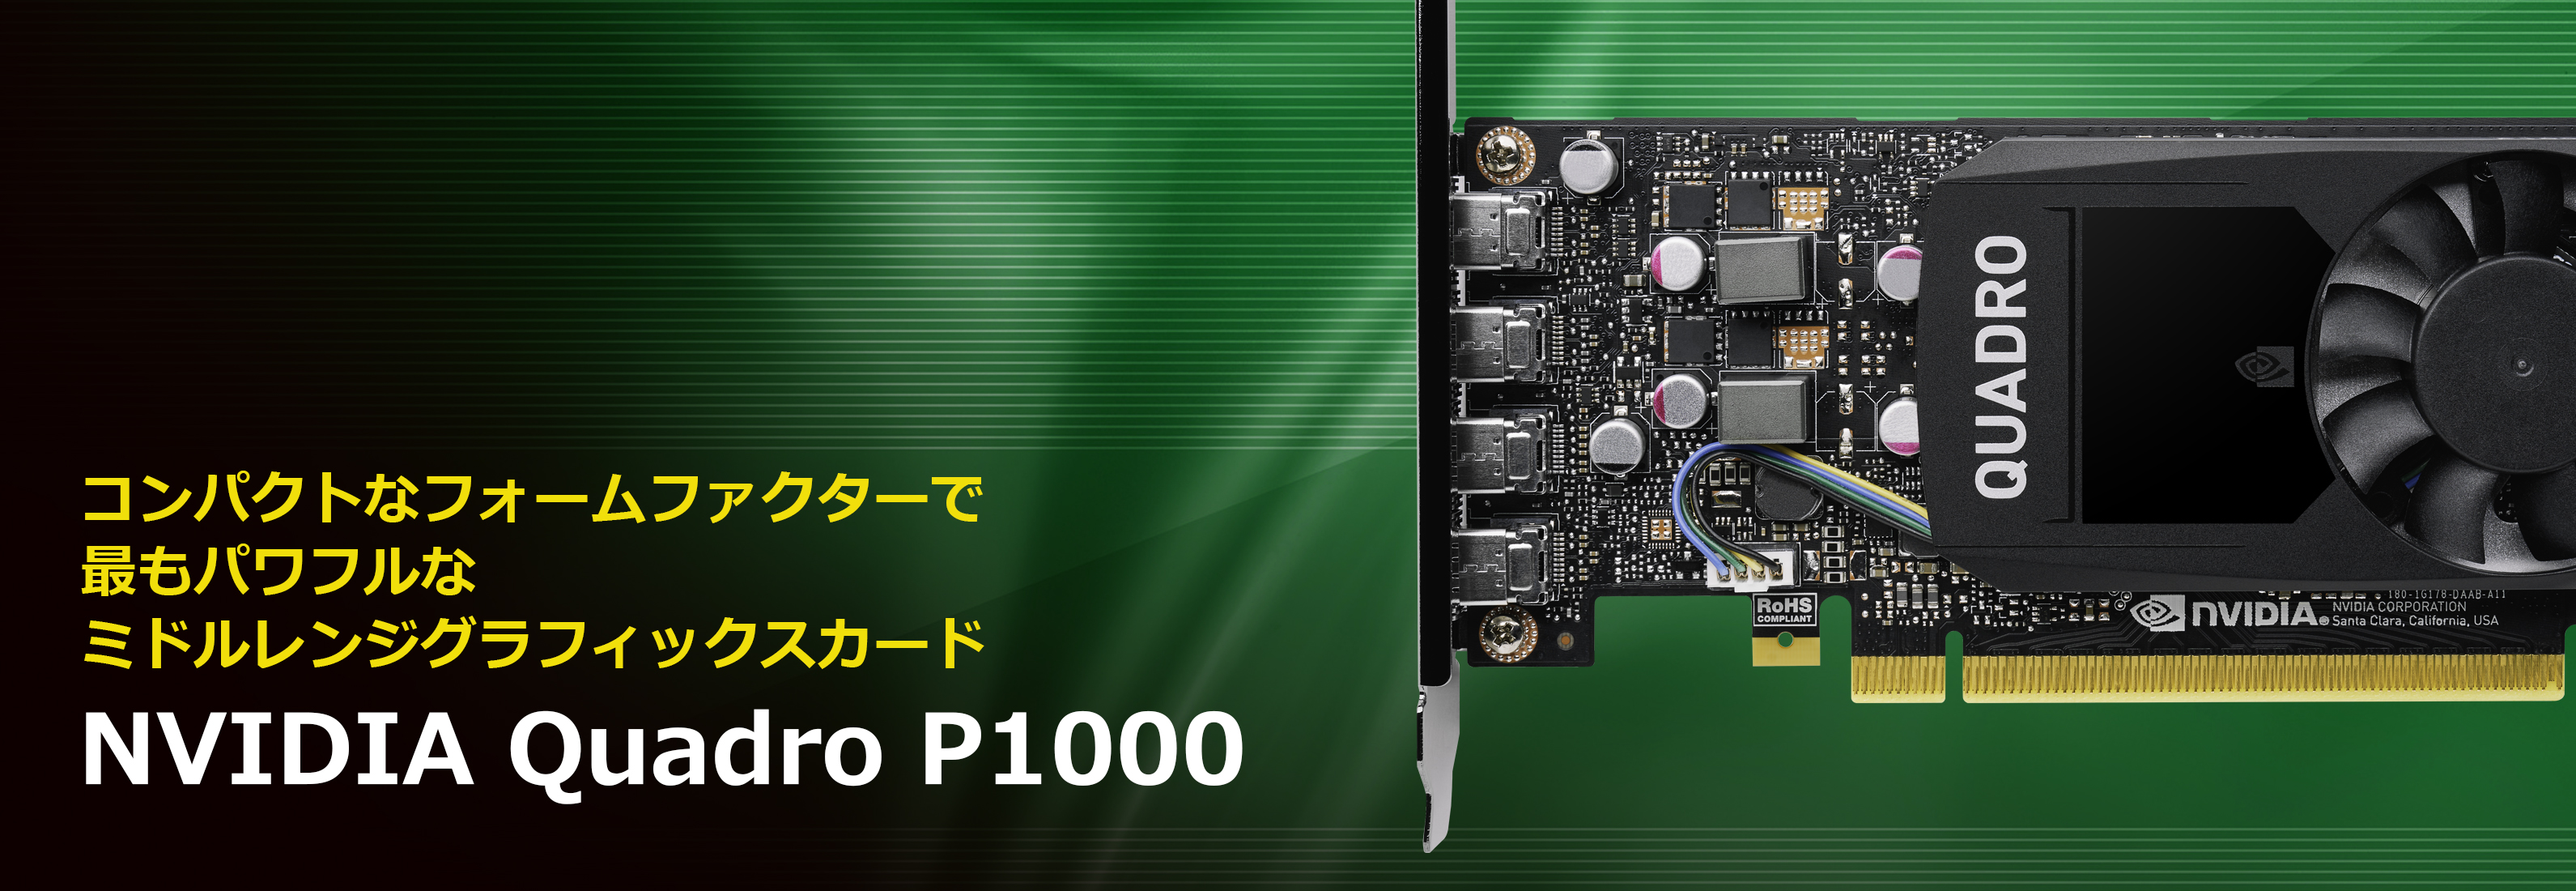 NVIDIA Quadro P1000 | 菱洋エレクトロ株式会社 - NVIDIA製品情報